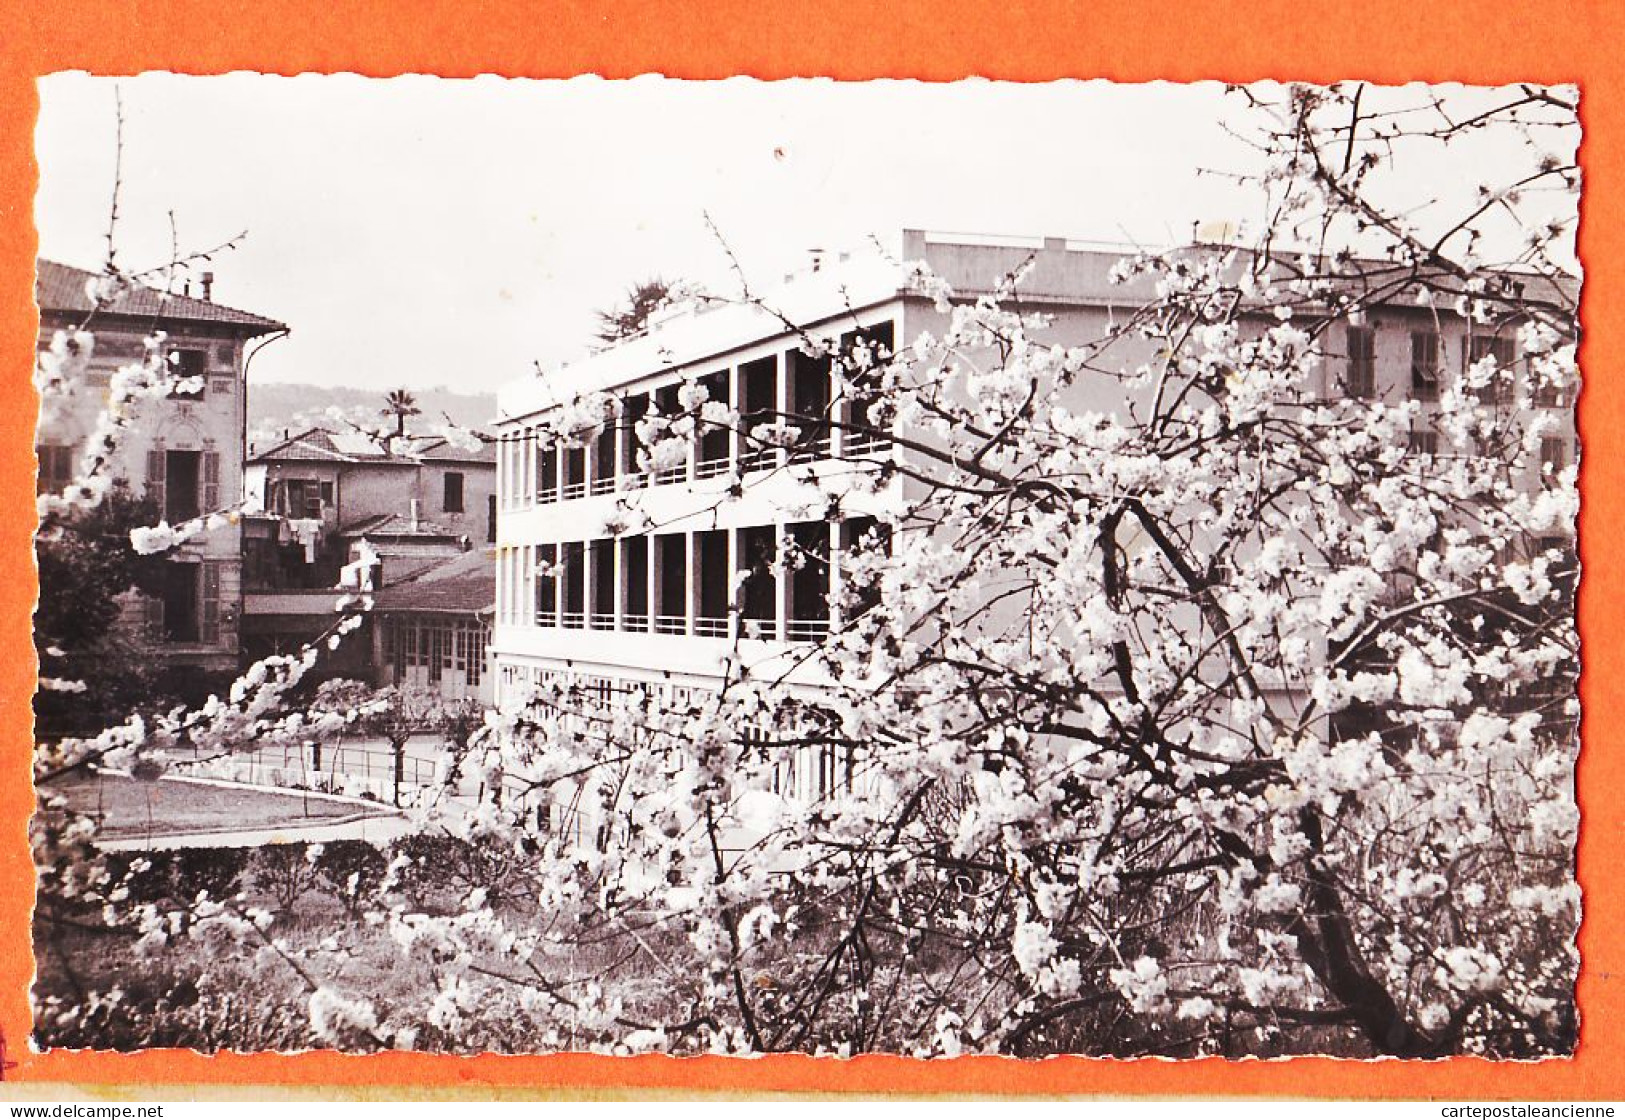 03507 / NICE Pavillon NOTRE-DAME N-D Foyer SAINT-DOMINIQUE Repos Convalescence Avenue ACACIAS 1950s Photo-Bromure - Salute, Ospedali